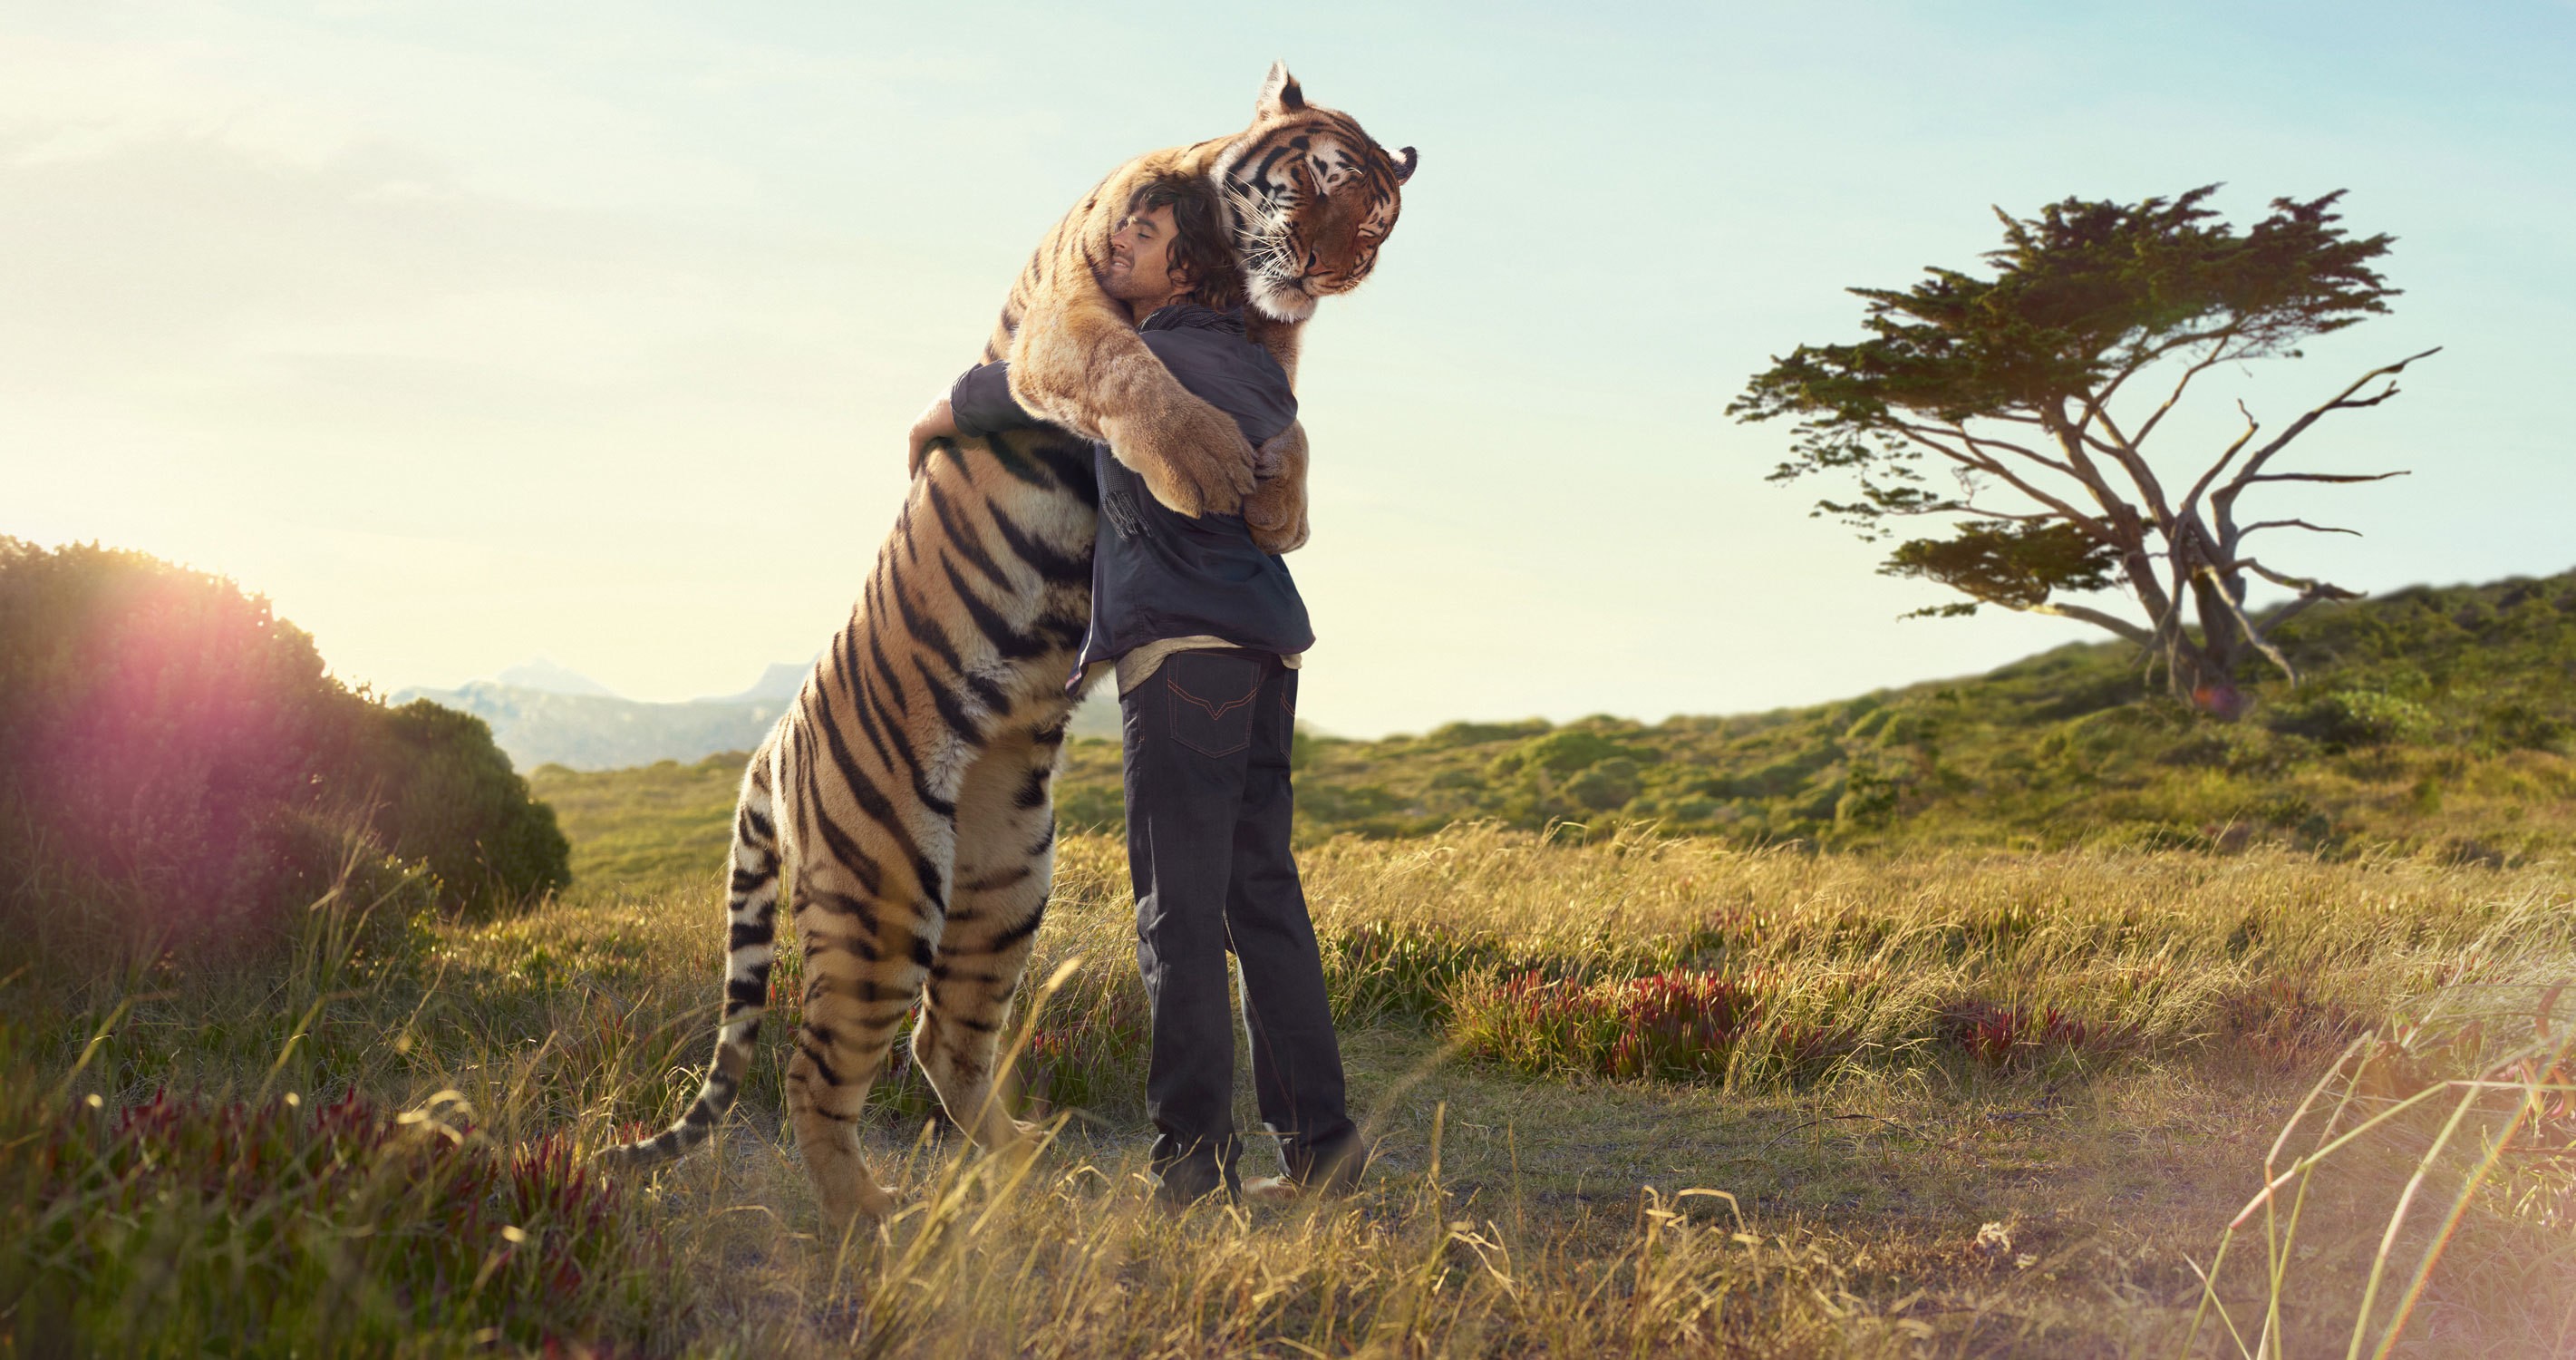 Nature Love Wallpaper Animals Tigers Fields